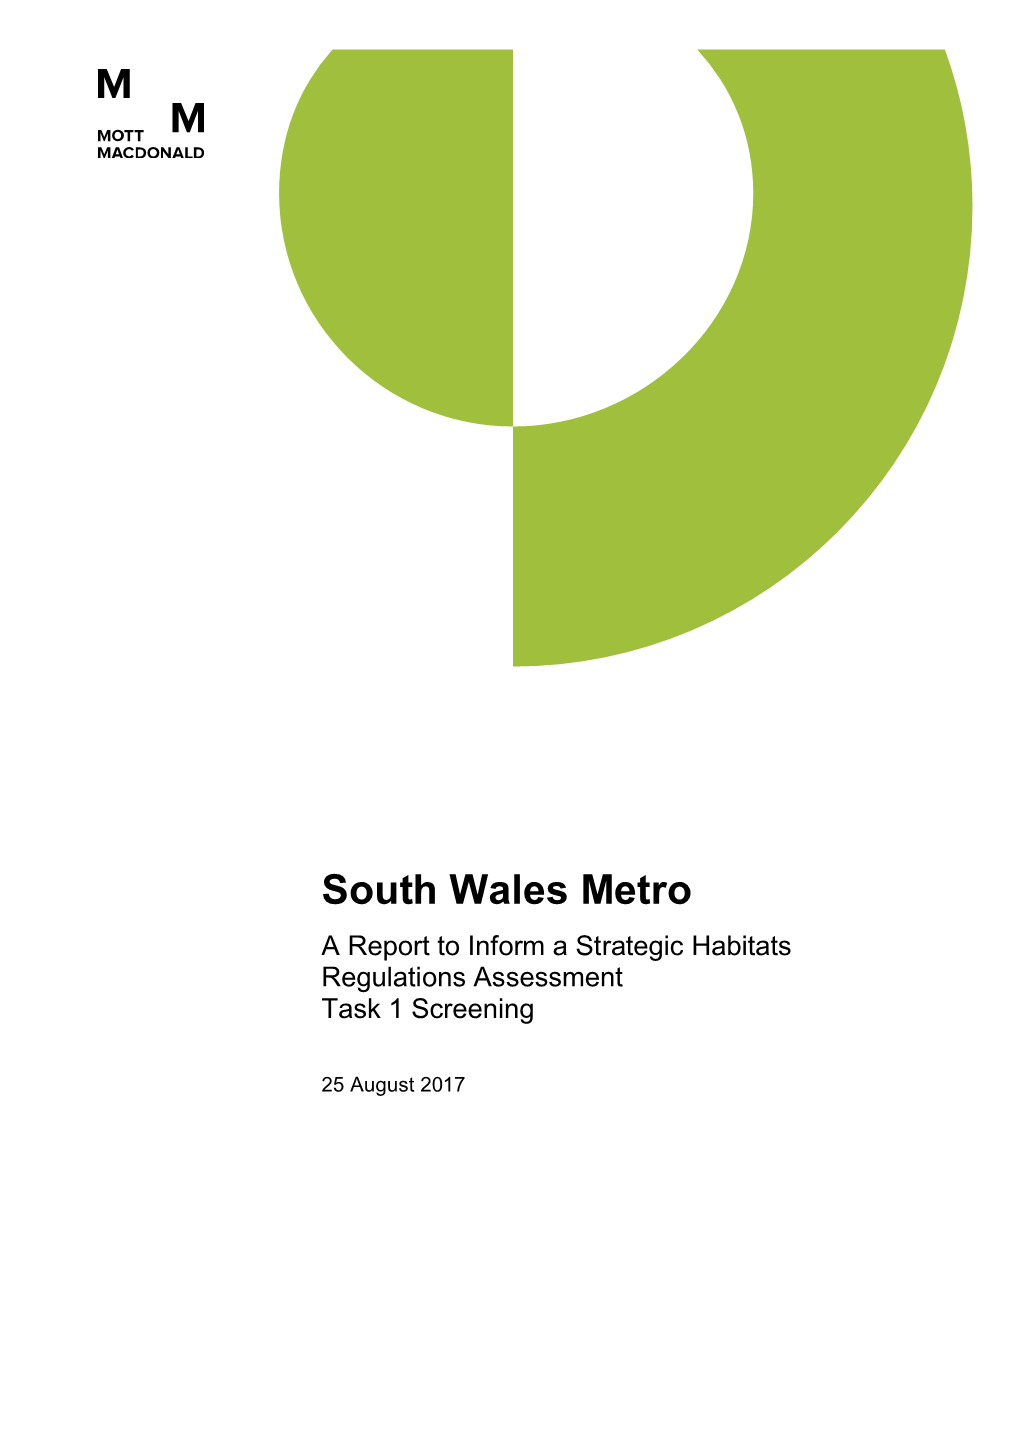 South Wales Metro a Report to Inform a Strategic Habitats Regulations Assessment Task 1 Screening